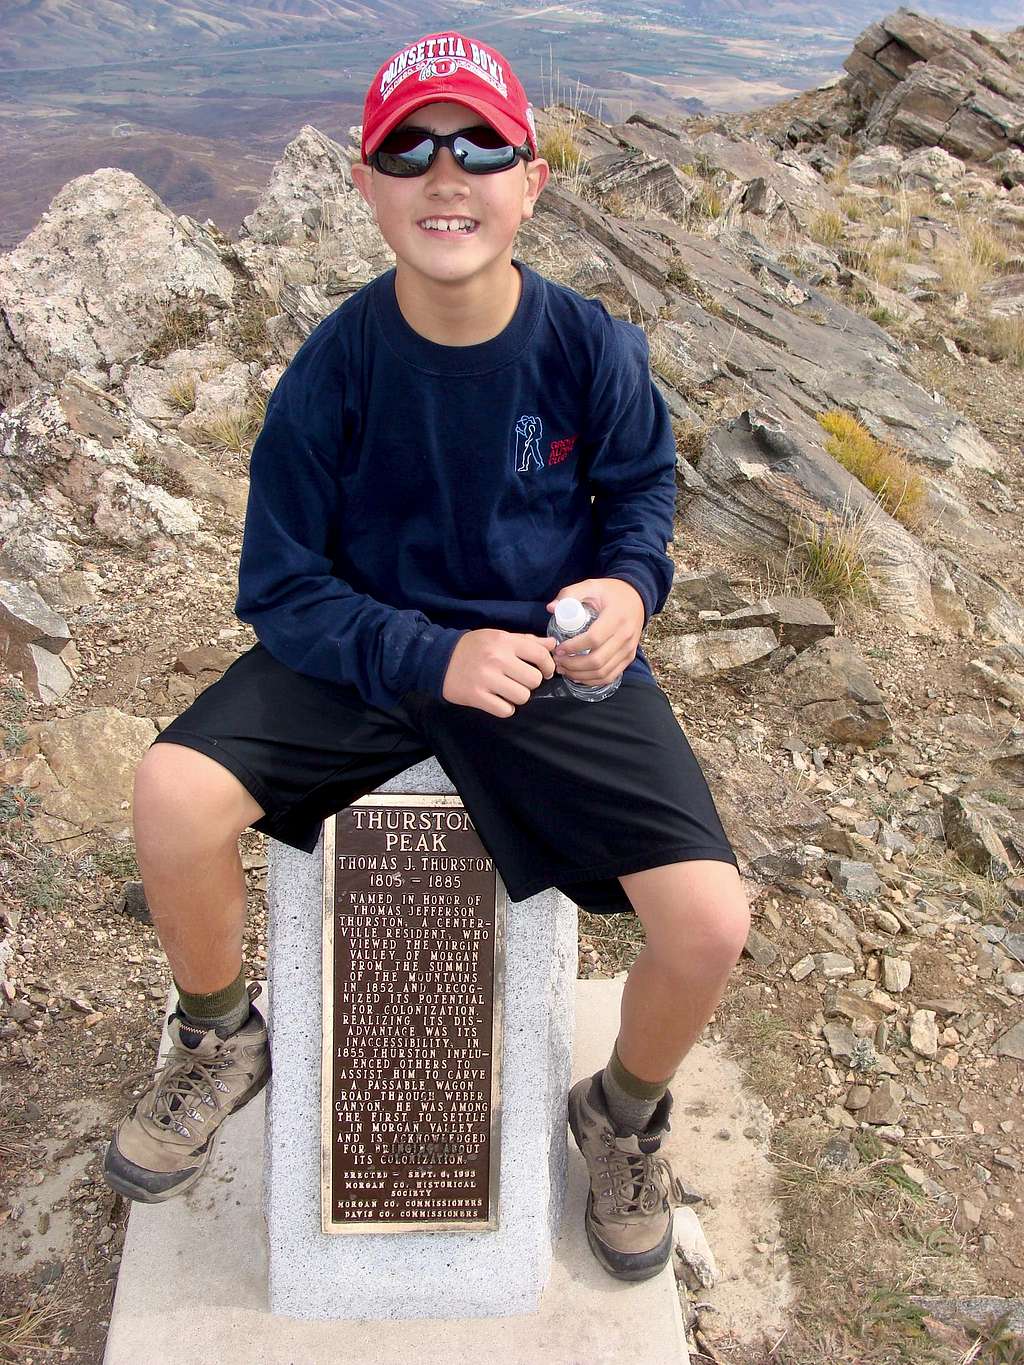 Liam on the summit